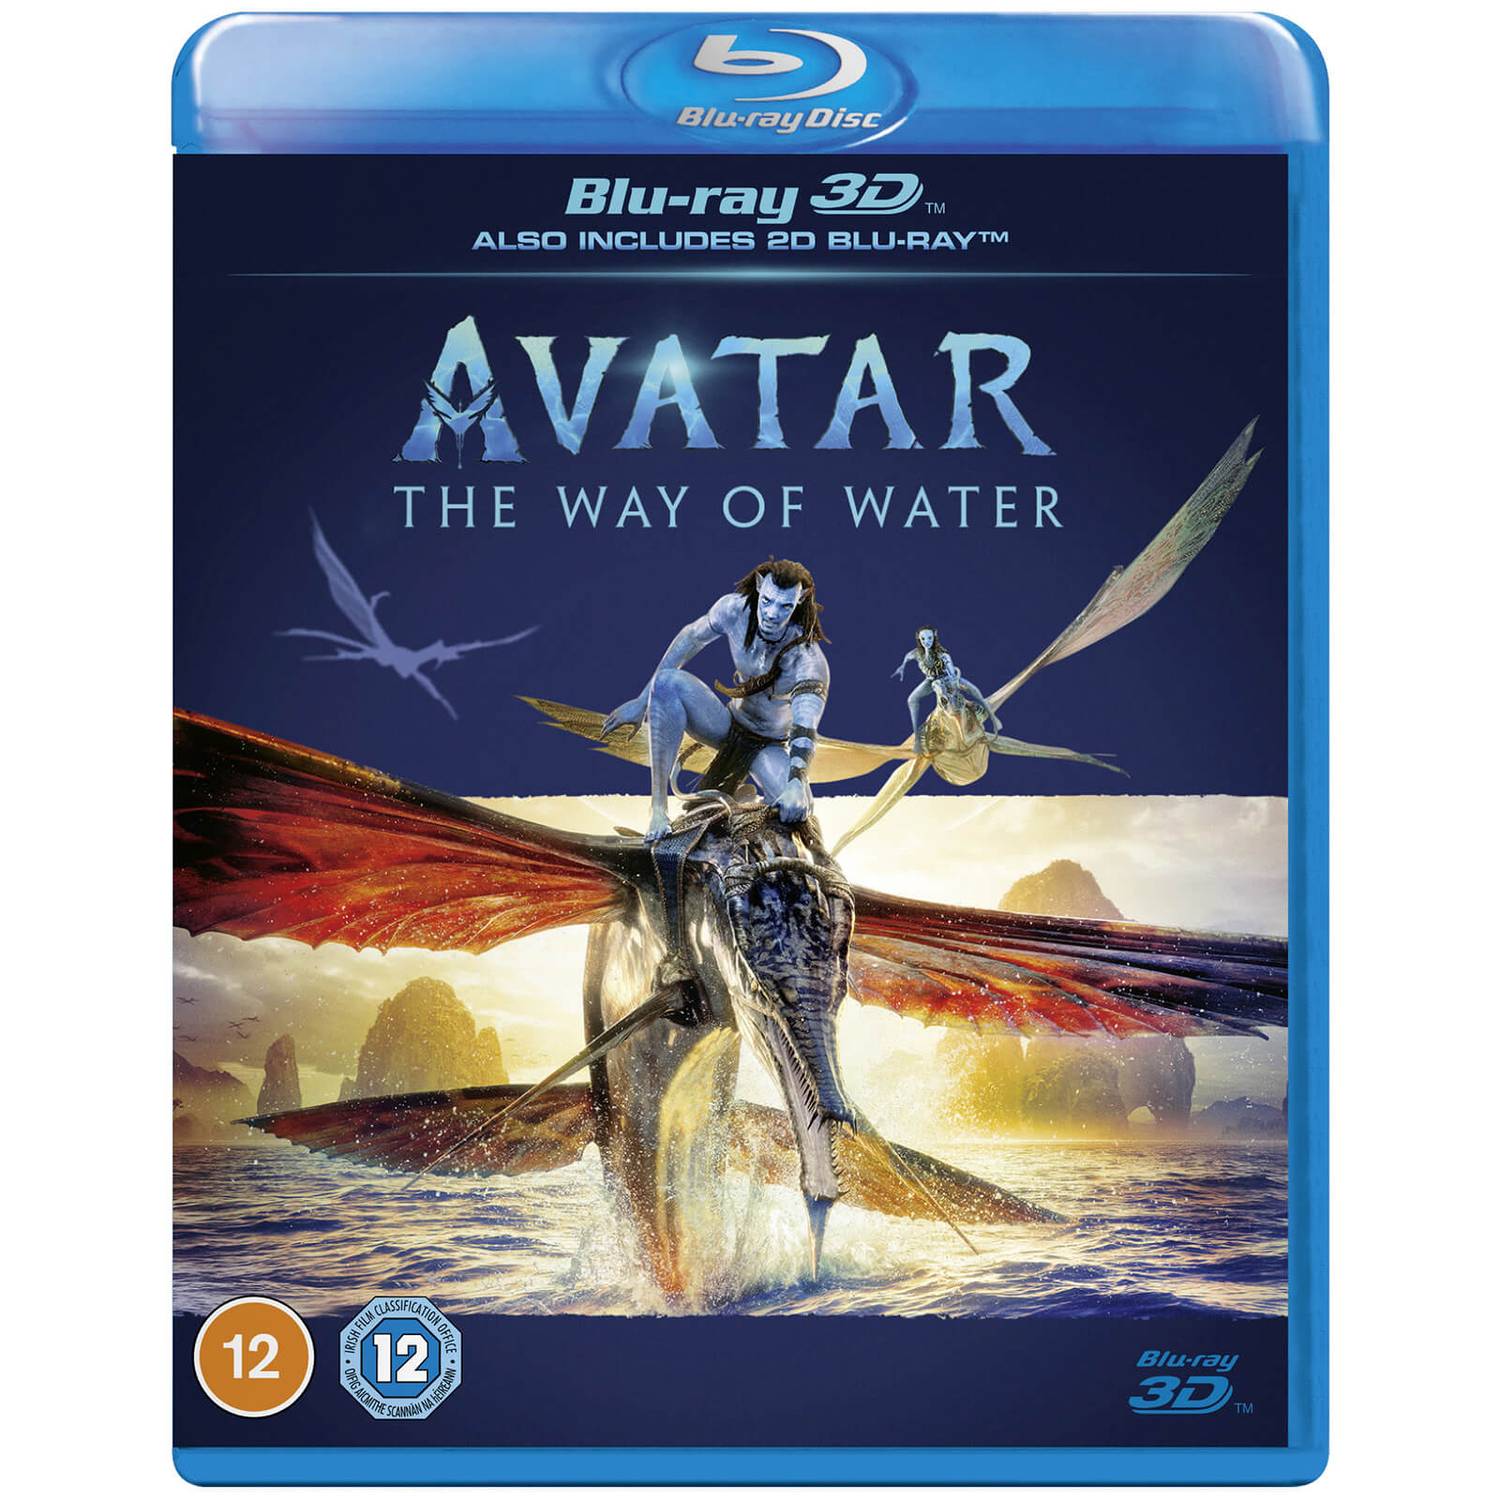 Avatar movie cover art.